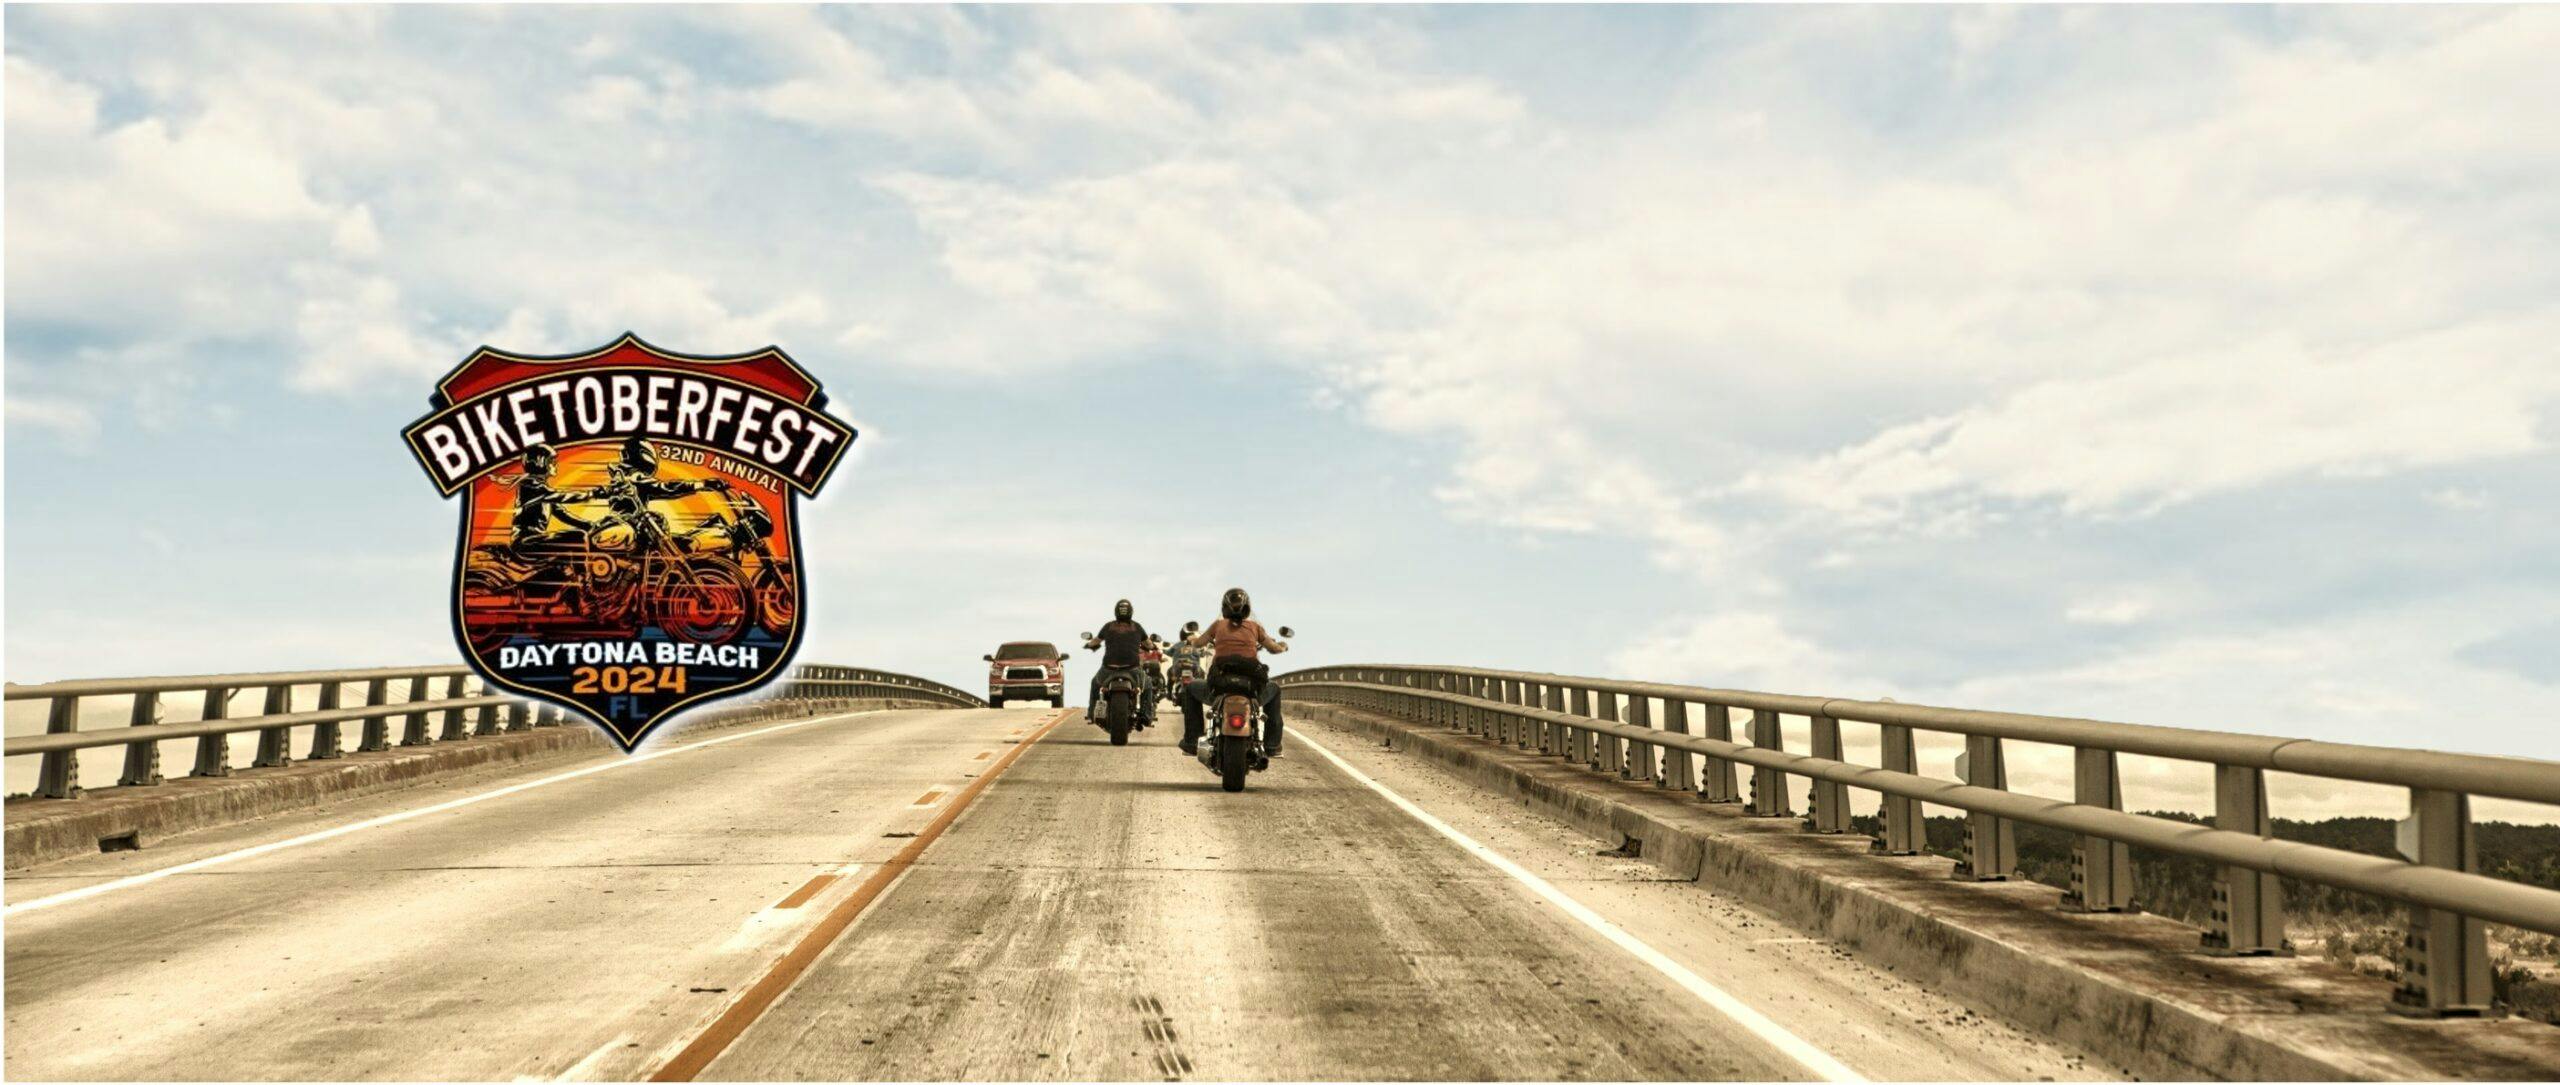 Biketoberfest & Best of Florida Tour